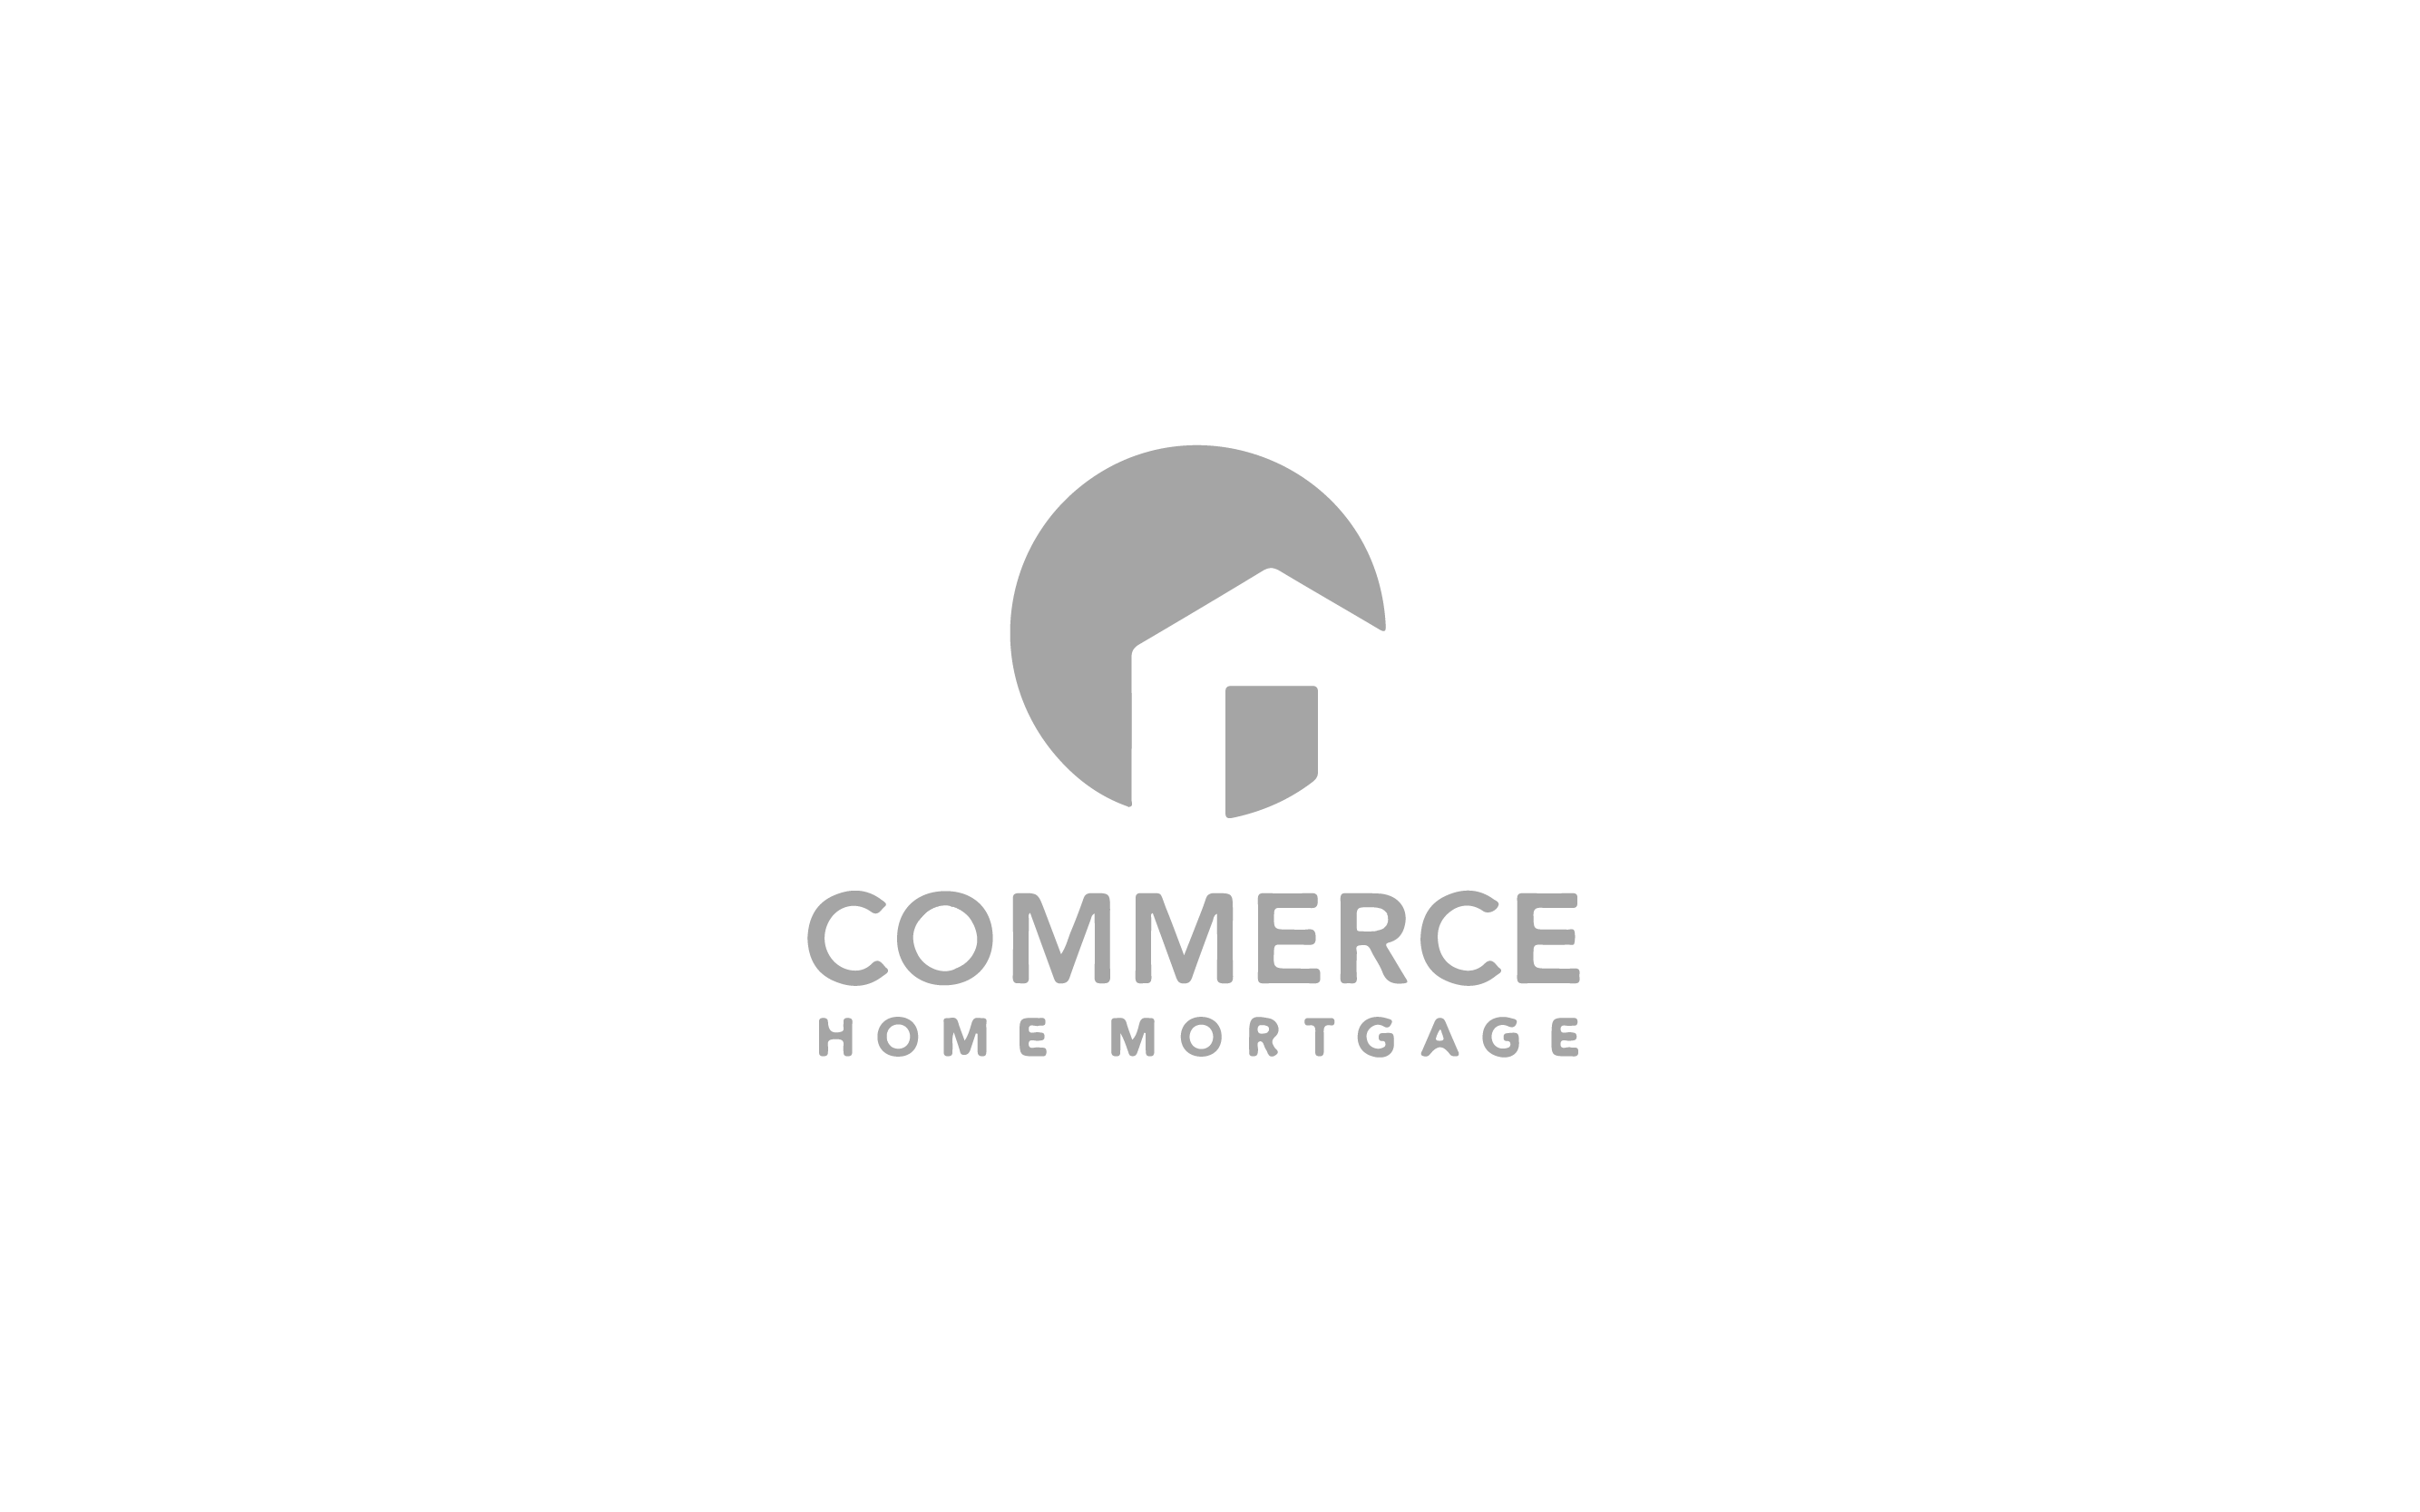 CommerceHomeMortgagegray-01